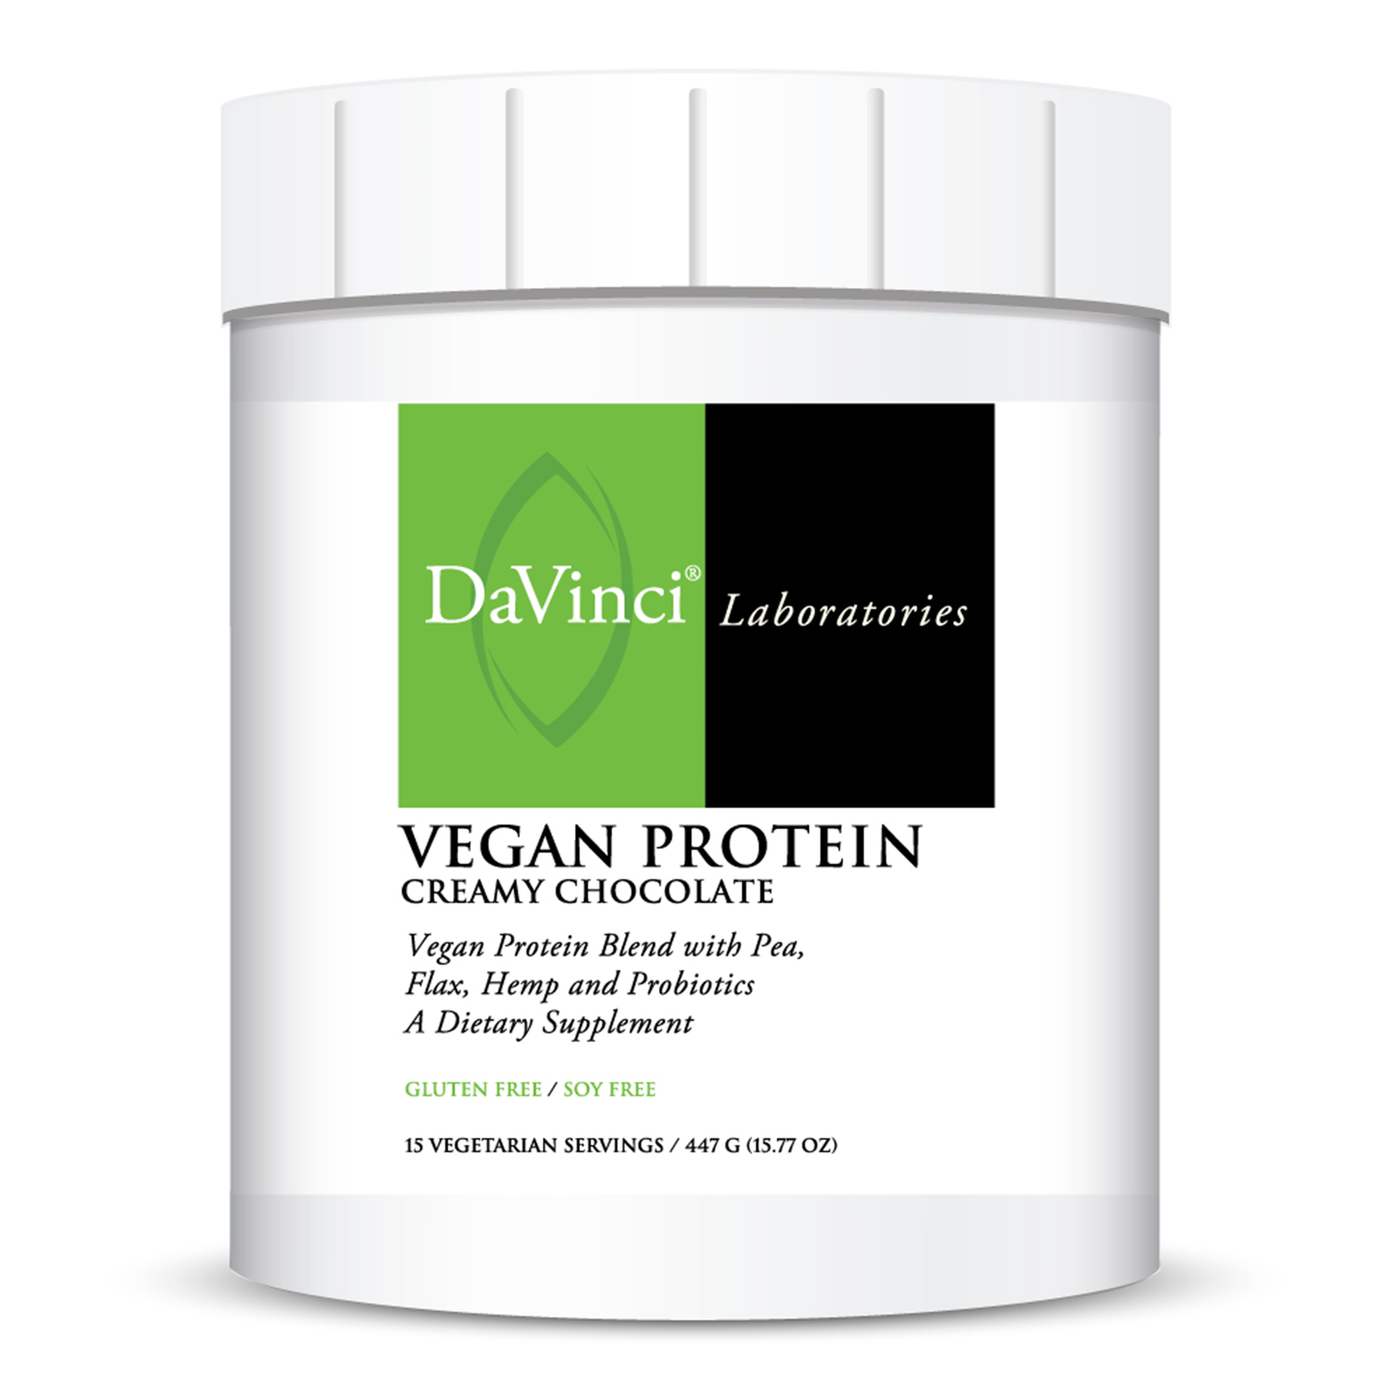 Vegan Protein Creamy Choc. ings Curated Wellness